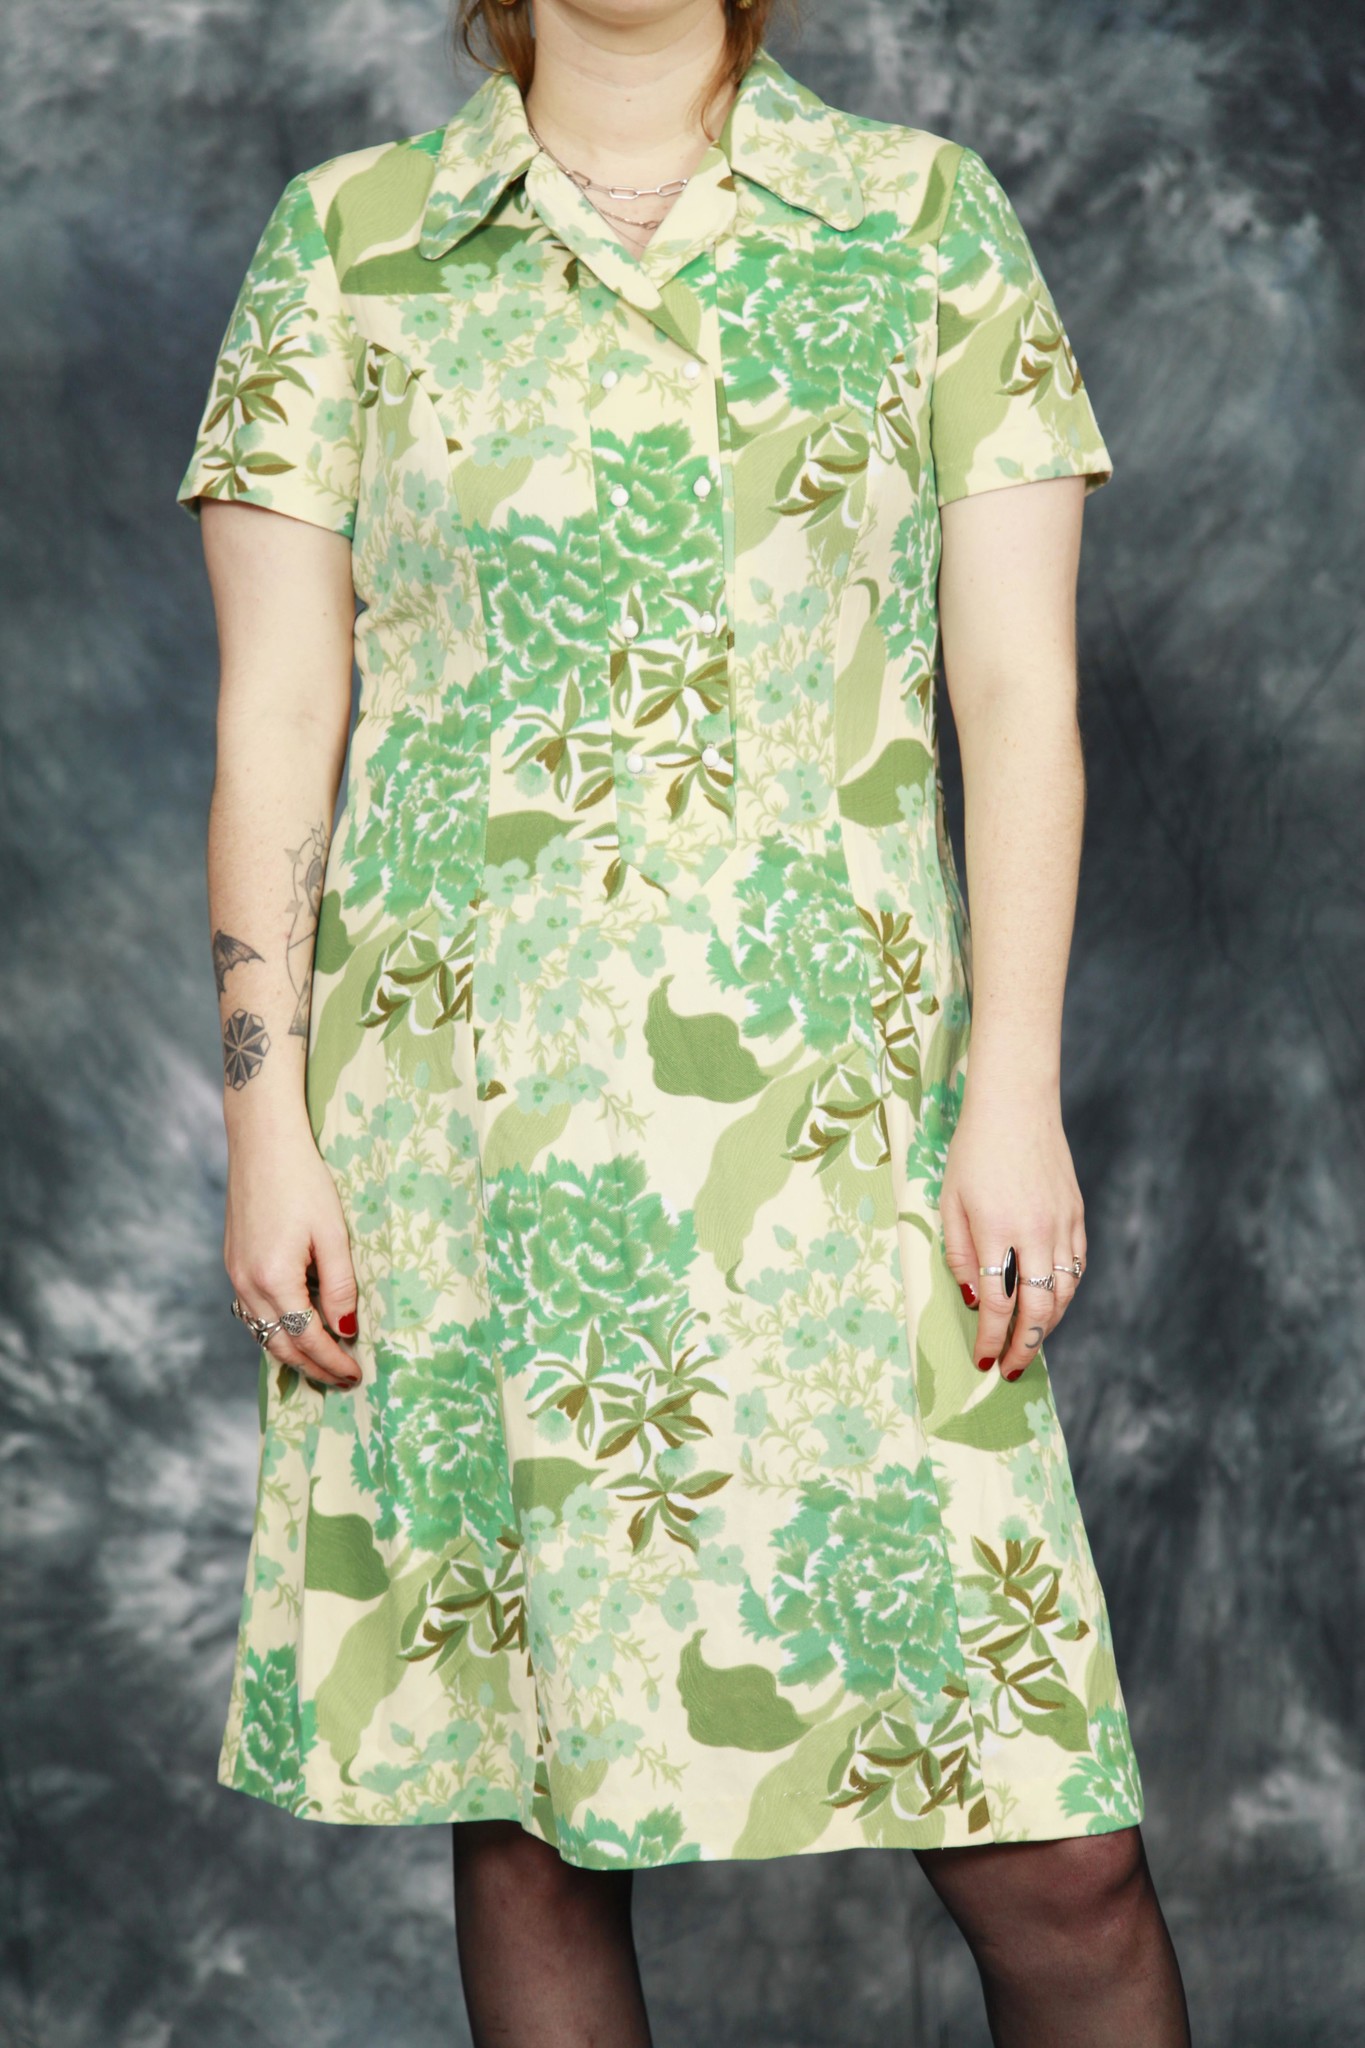 Green floral 70s dress